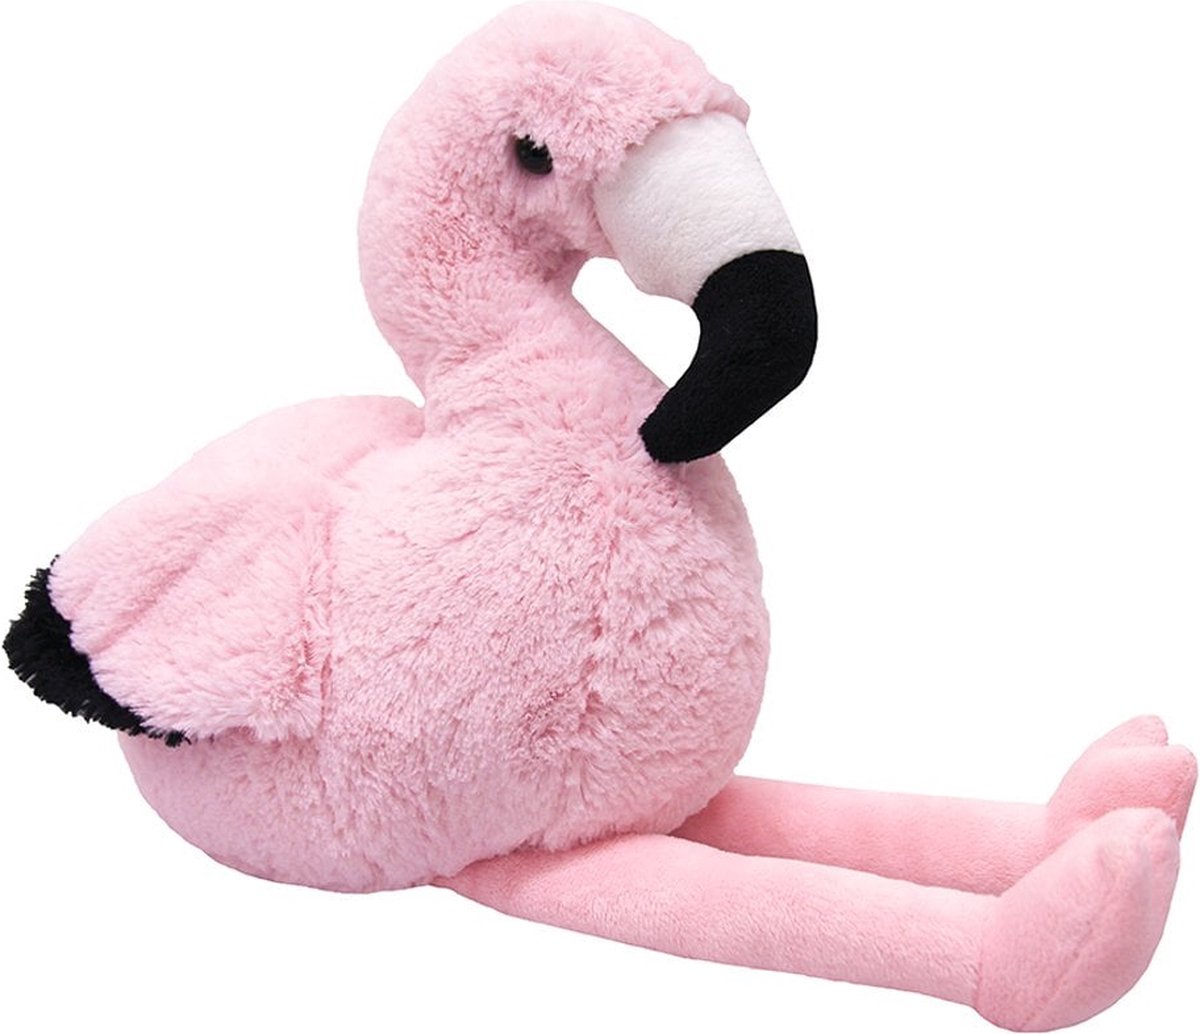 Deurstopper Flamingo - 26 cm hoog - Deurstop